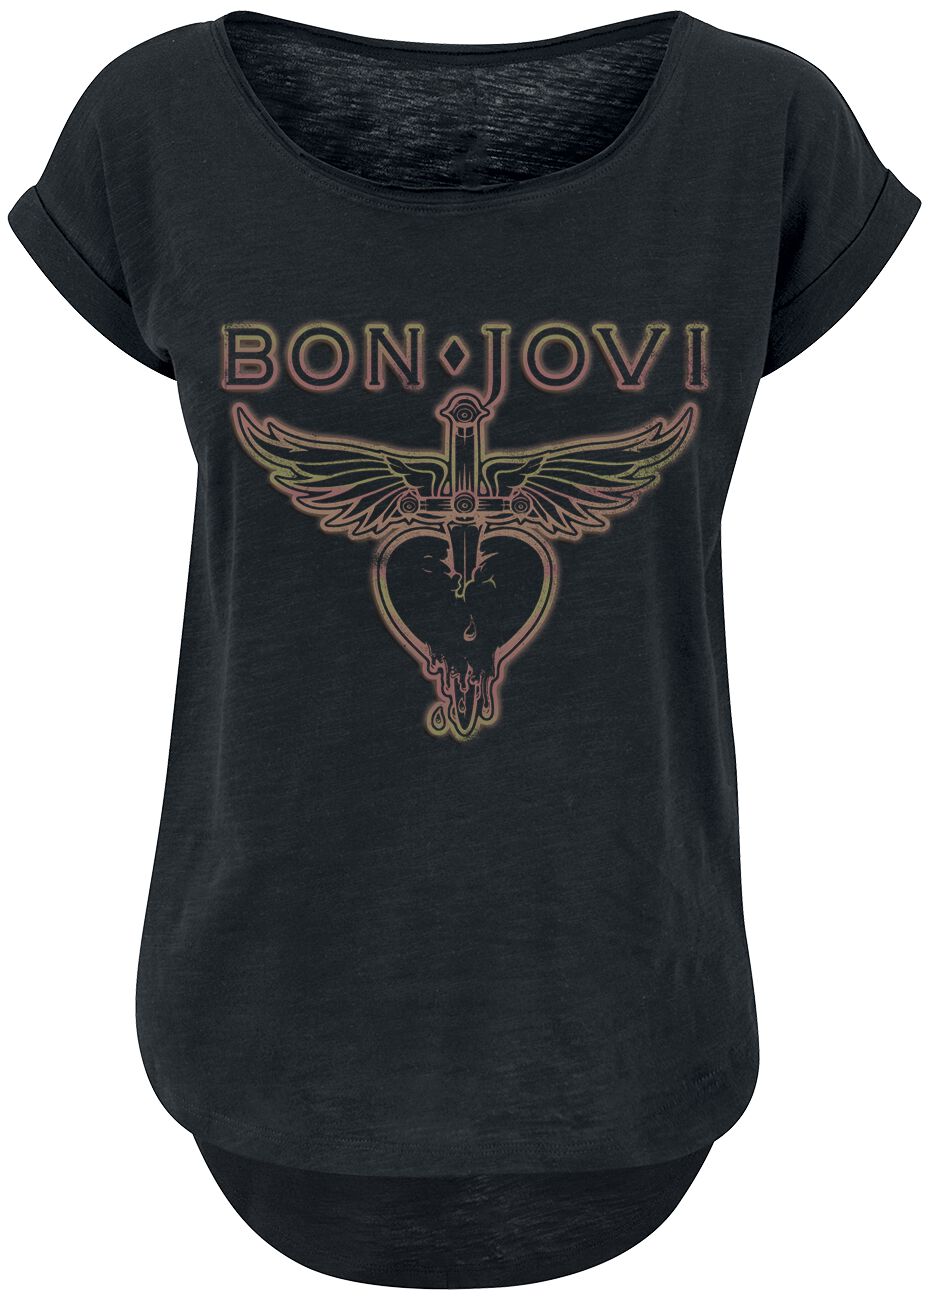 bon jovi t-shirt - heart & dagger outline - s bis 3xl - fÃ¼r damen - grÃ¶ÃŸe m - - lizenziertes merchandise! schwarz donna